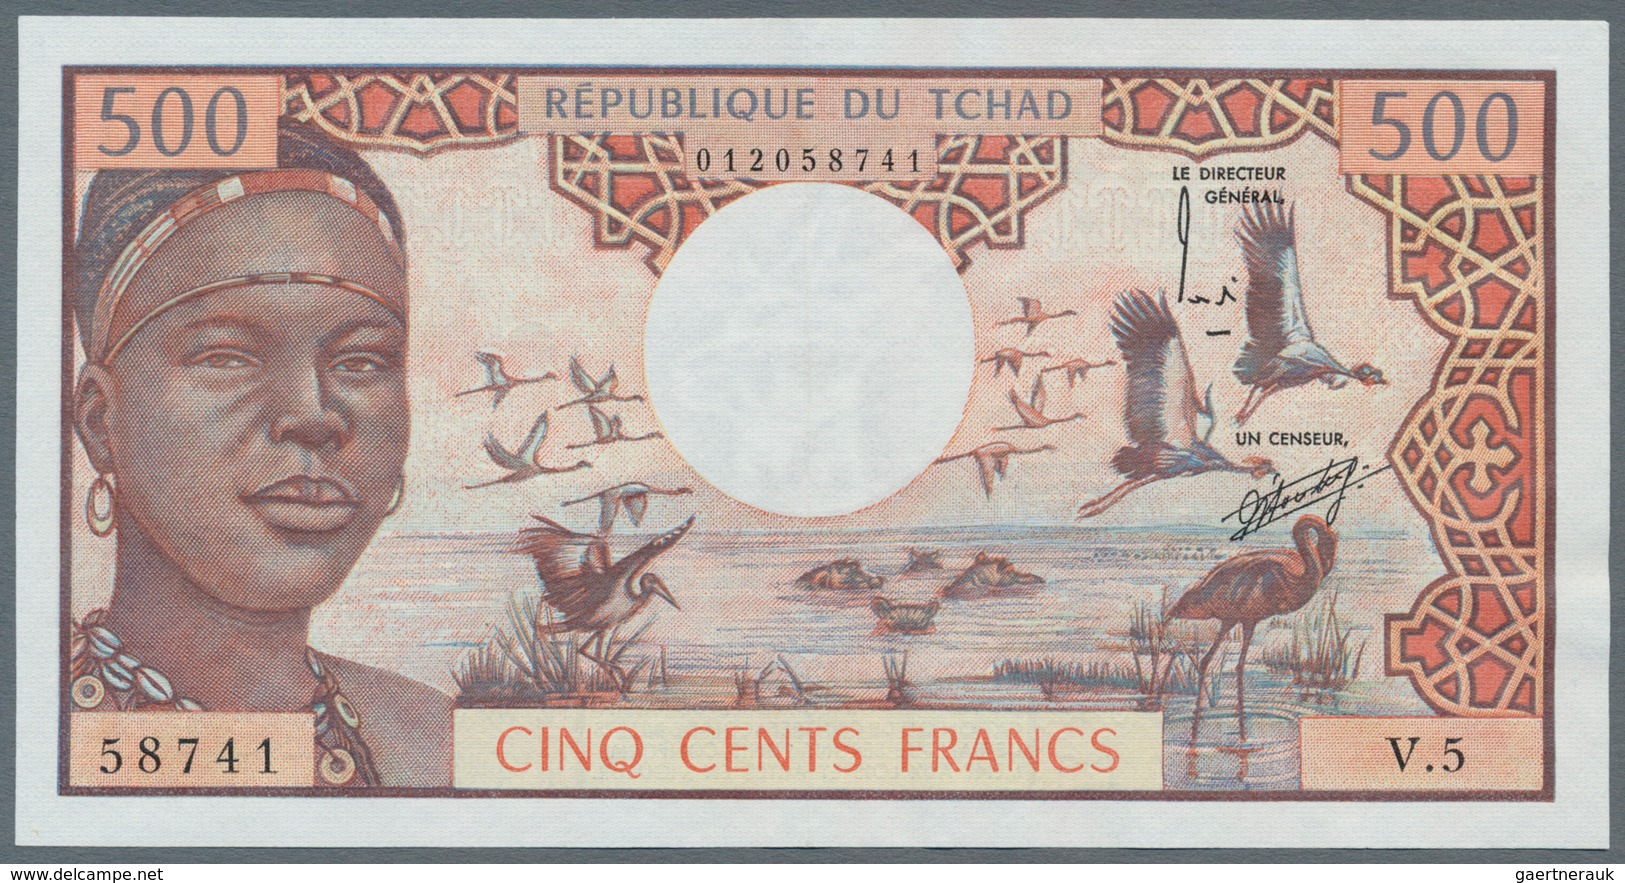 Chad / Tschad: 500 Francs ND(1974) P. 2, Crisp Original Apper, Original Colors, Light Handling In Pa - Tschad